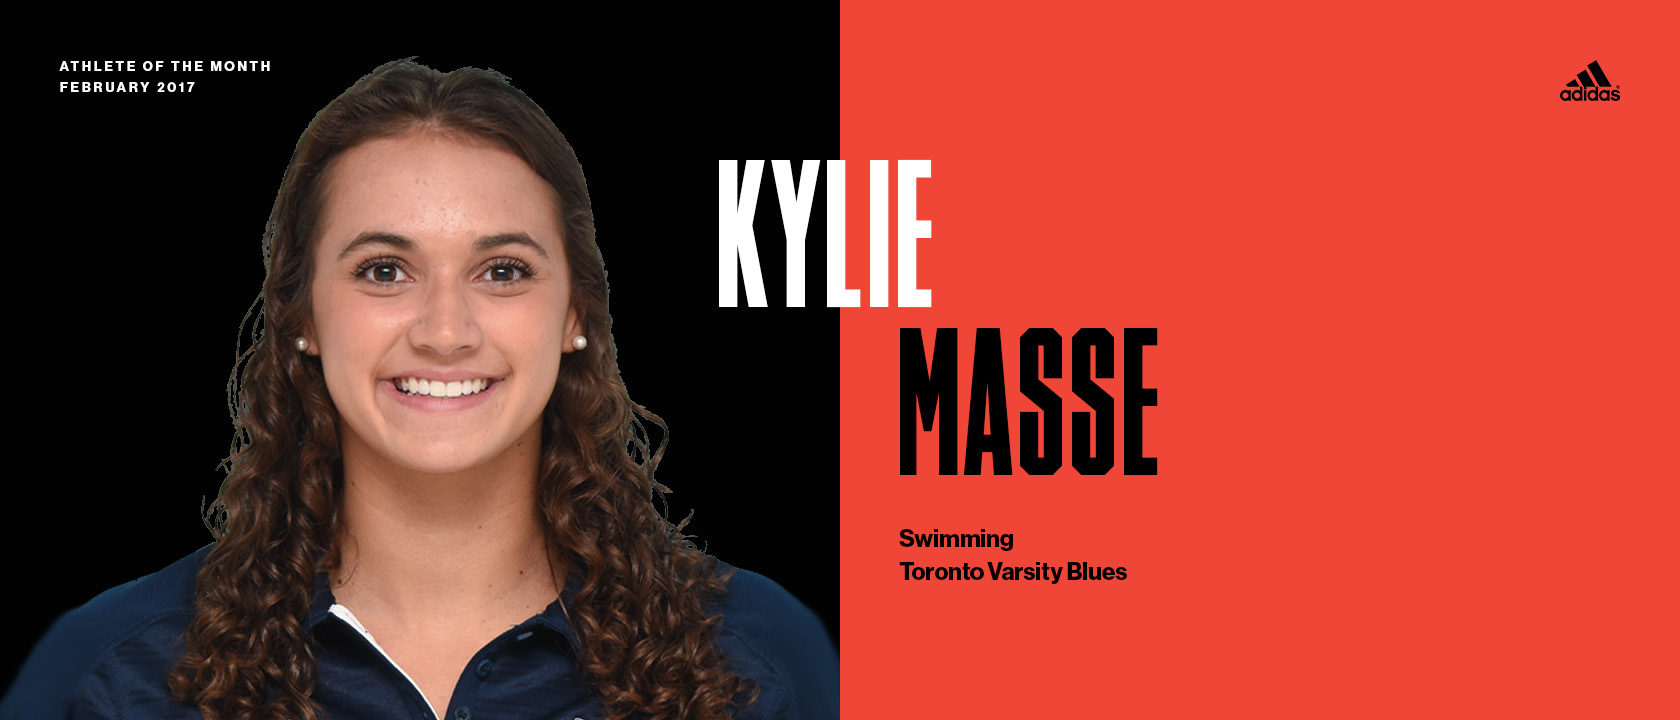 February: Kylie Masse